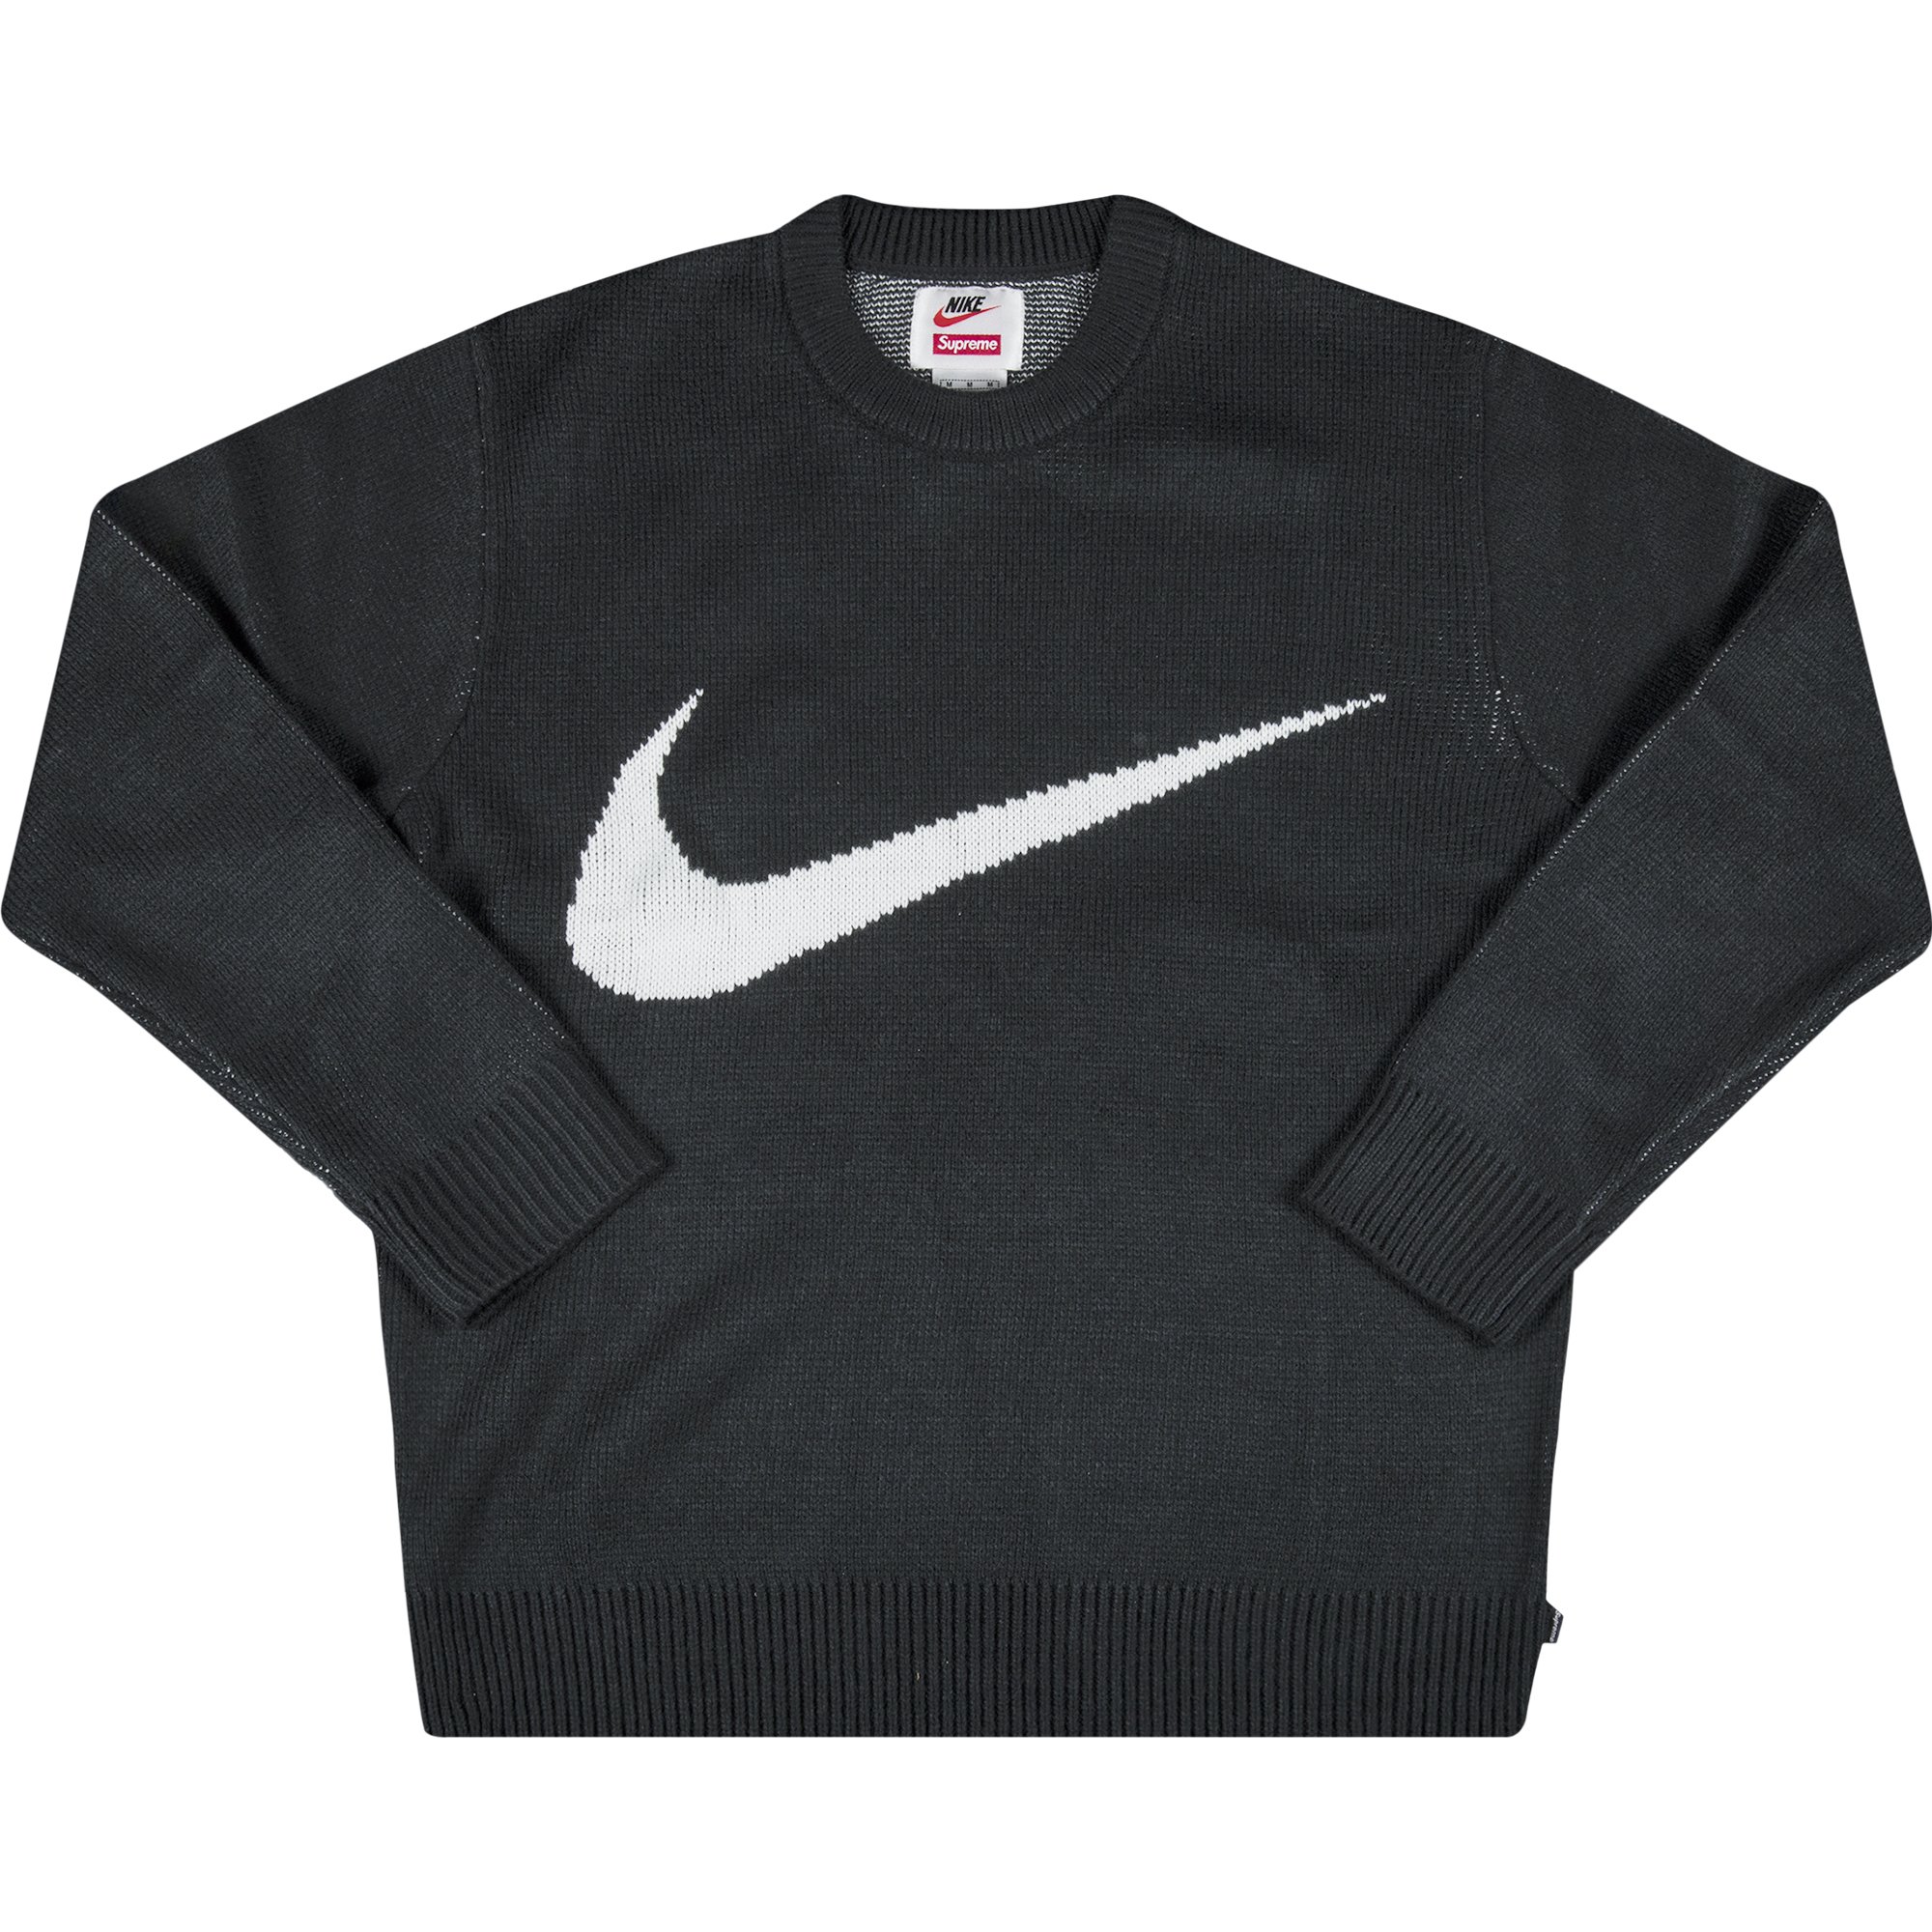 Buy Supreme x Nike Swoosh Sweater 'Black' - SS19SK2 BLACK | GOAT